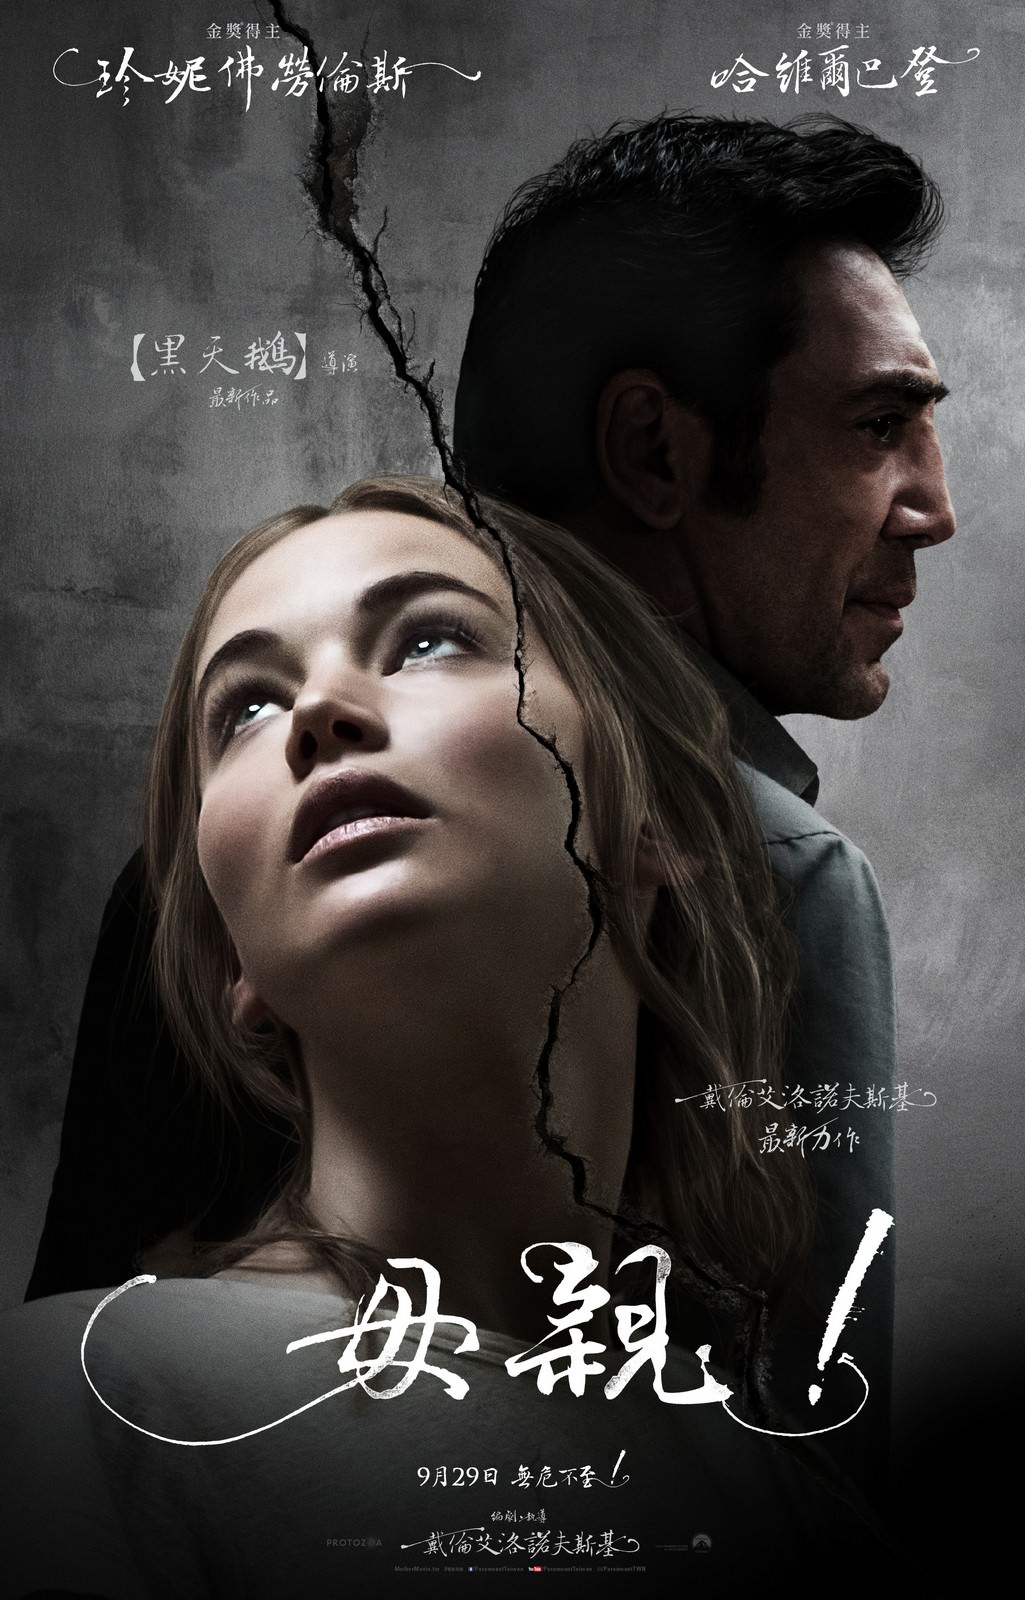 Movie, Mother!(美國, 2017年) / 母親！(台灣) / 媽媽(香港), 電影海報, 台灣